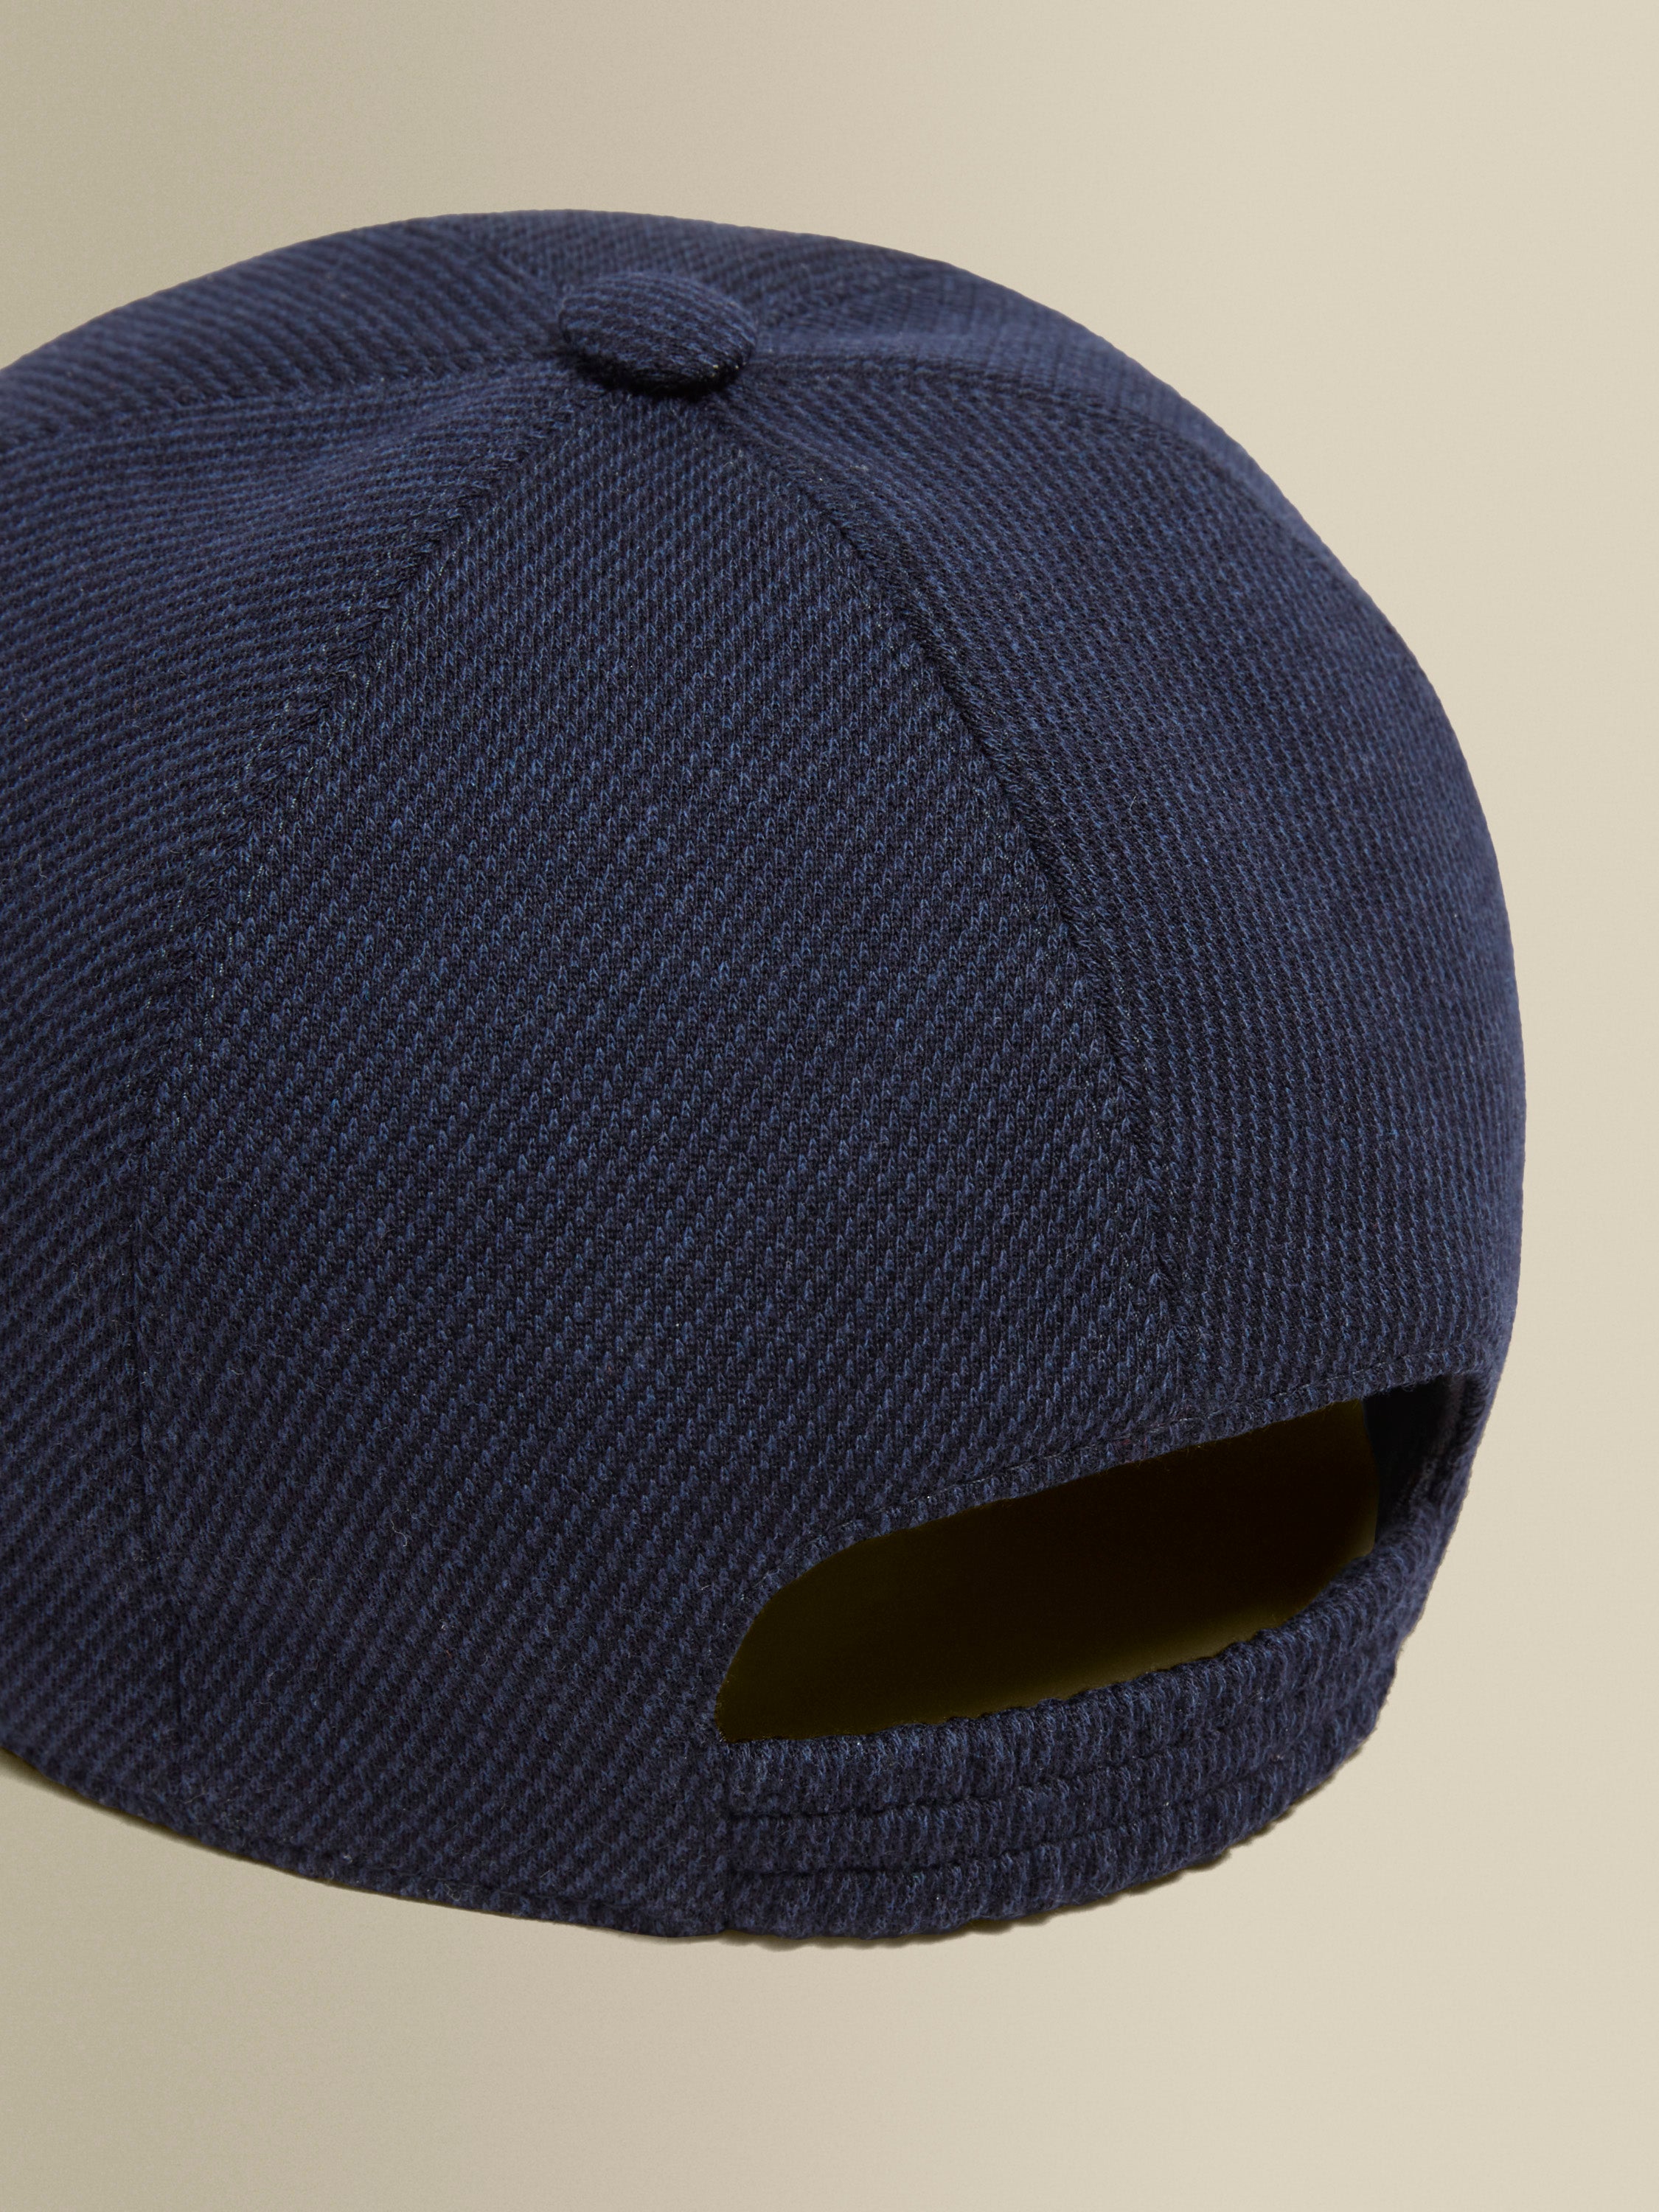 Wool Cotton Baseball Cap Navy Detail Product Image